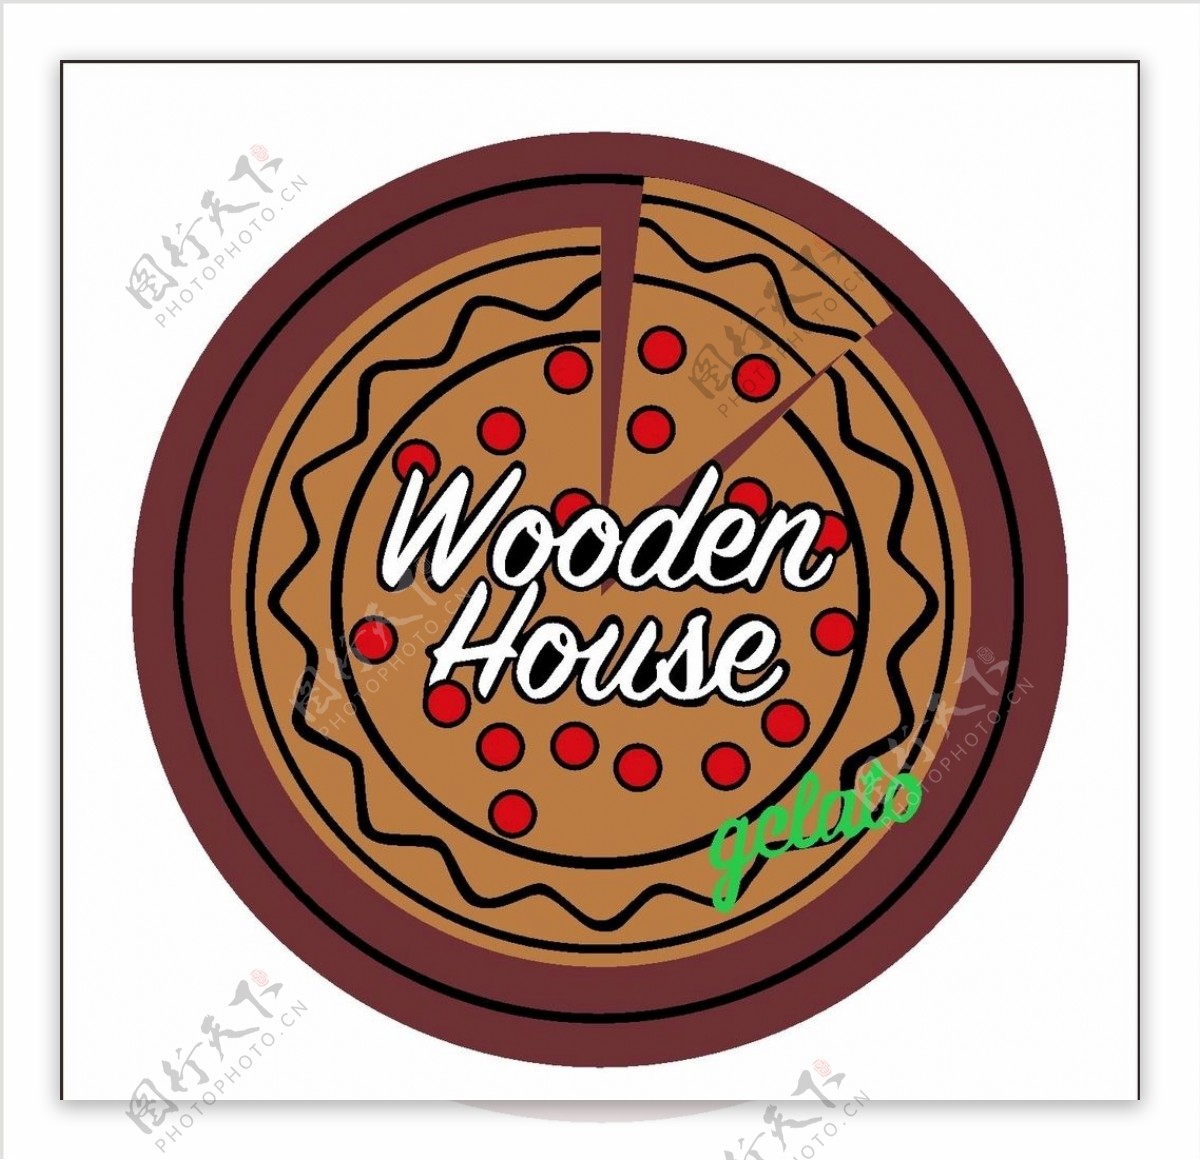 woodenhouse披萨